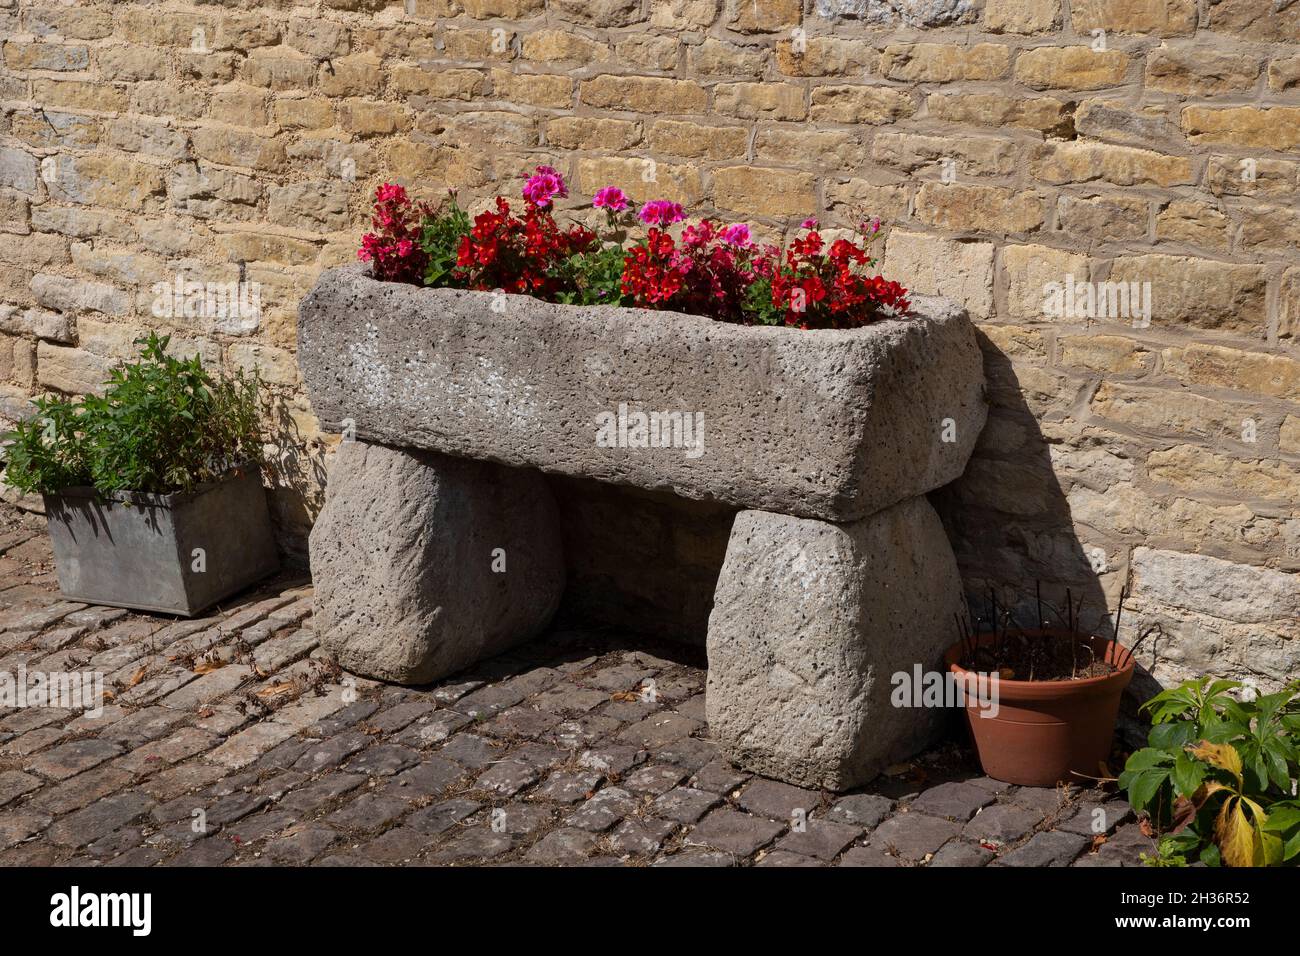 Sone summer garden display trough in english garden Stock Photo